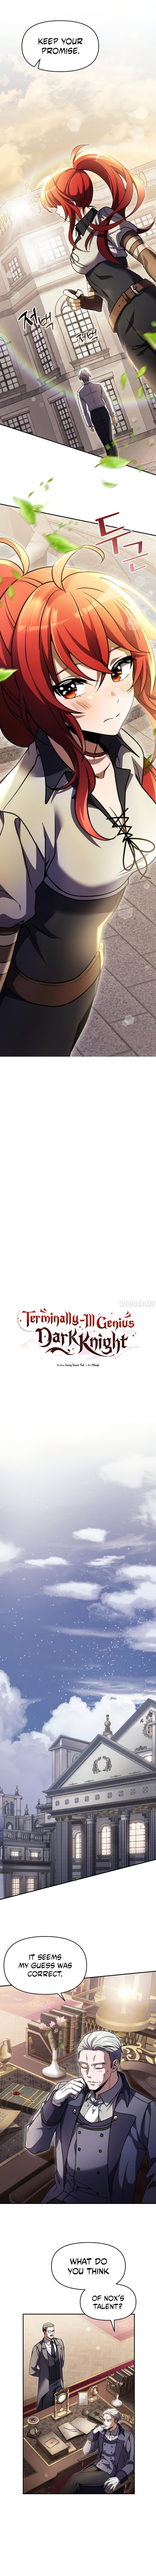 terminally-ill-genius-dark-knight-chap-8-6